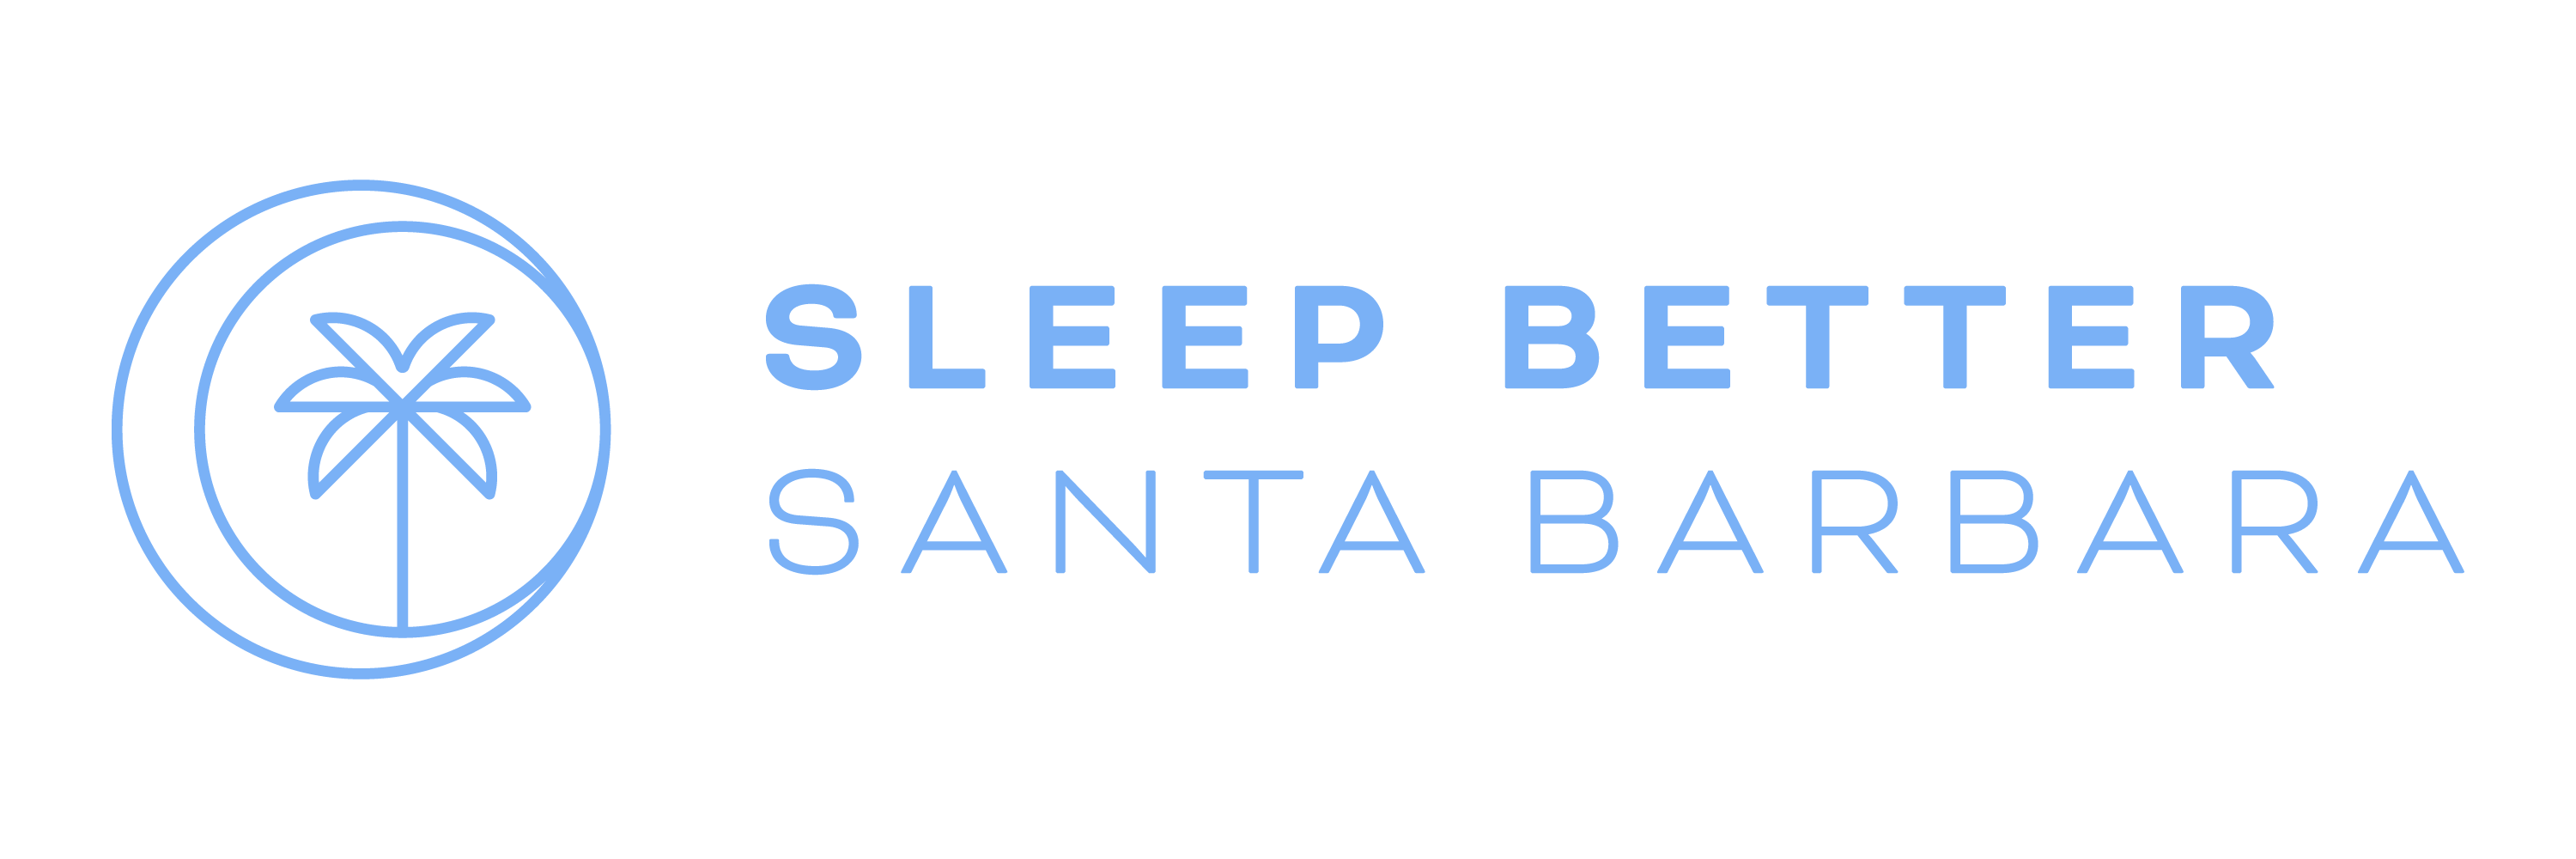 Sleep Better Santa Barbara Photo